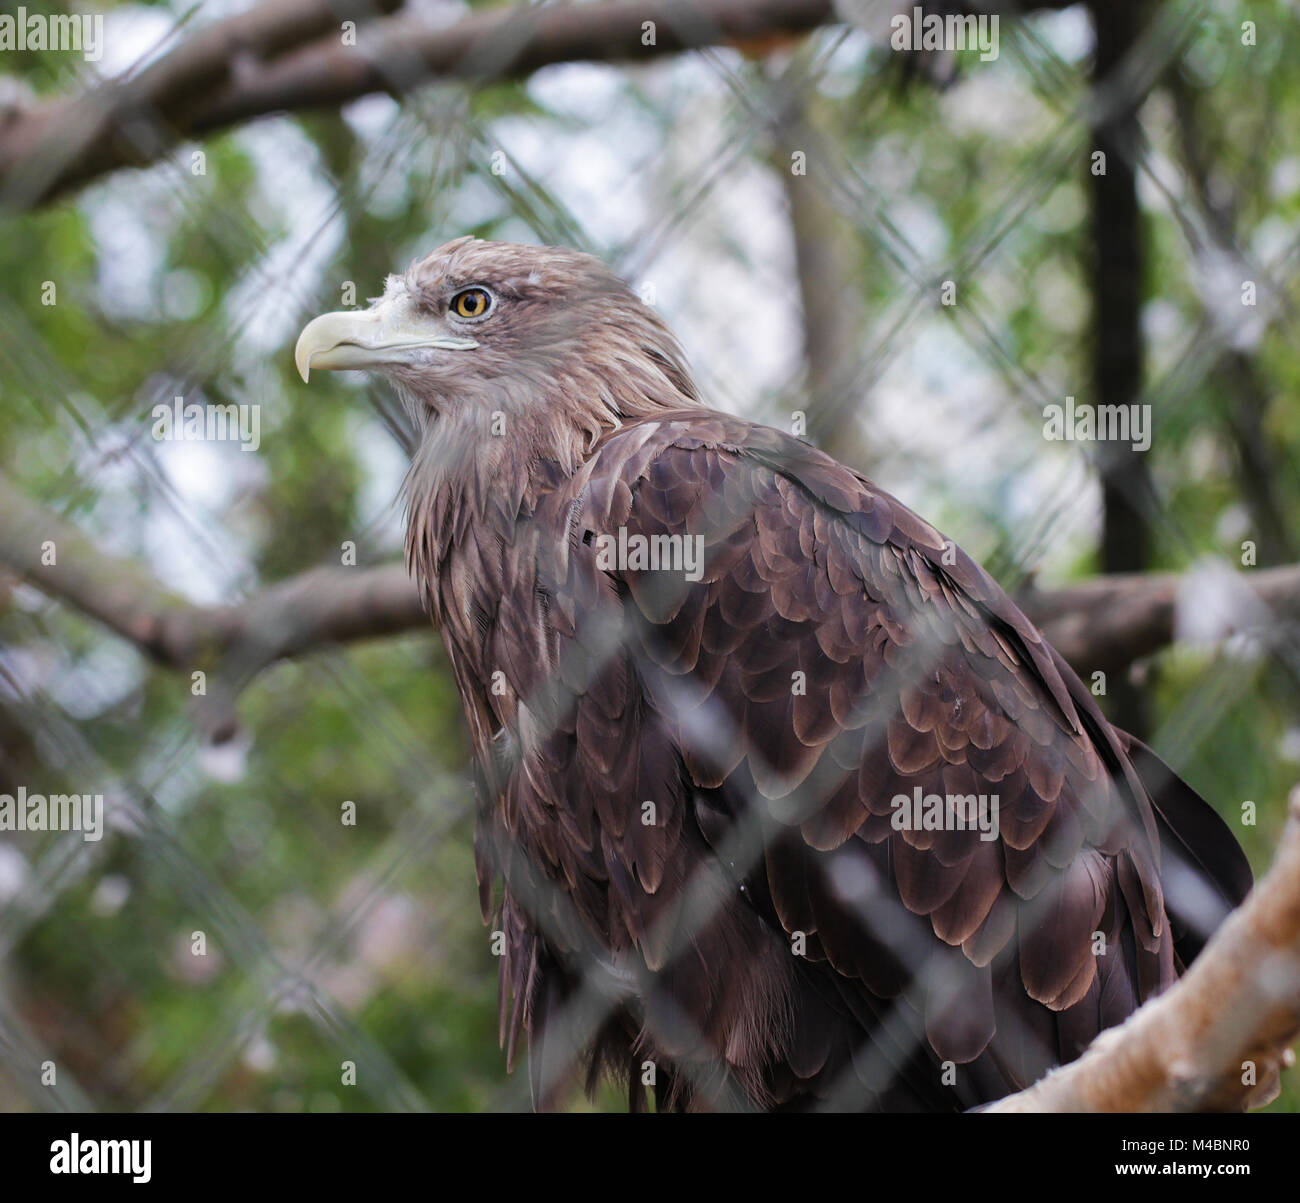 Golden Eagle bird close up ritratto animale Foto Stock